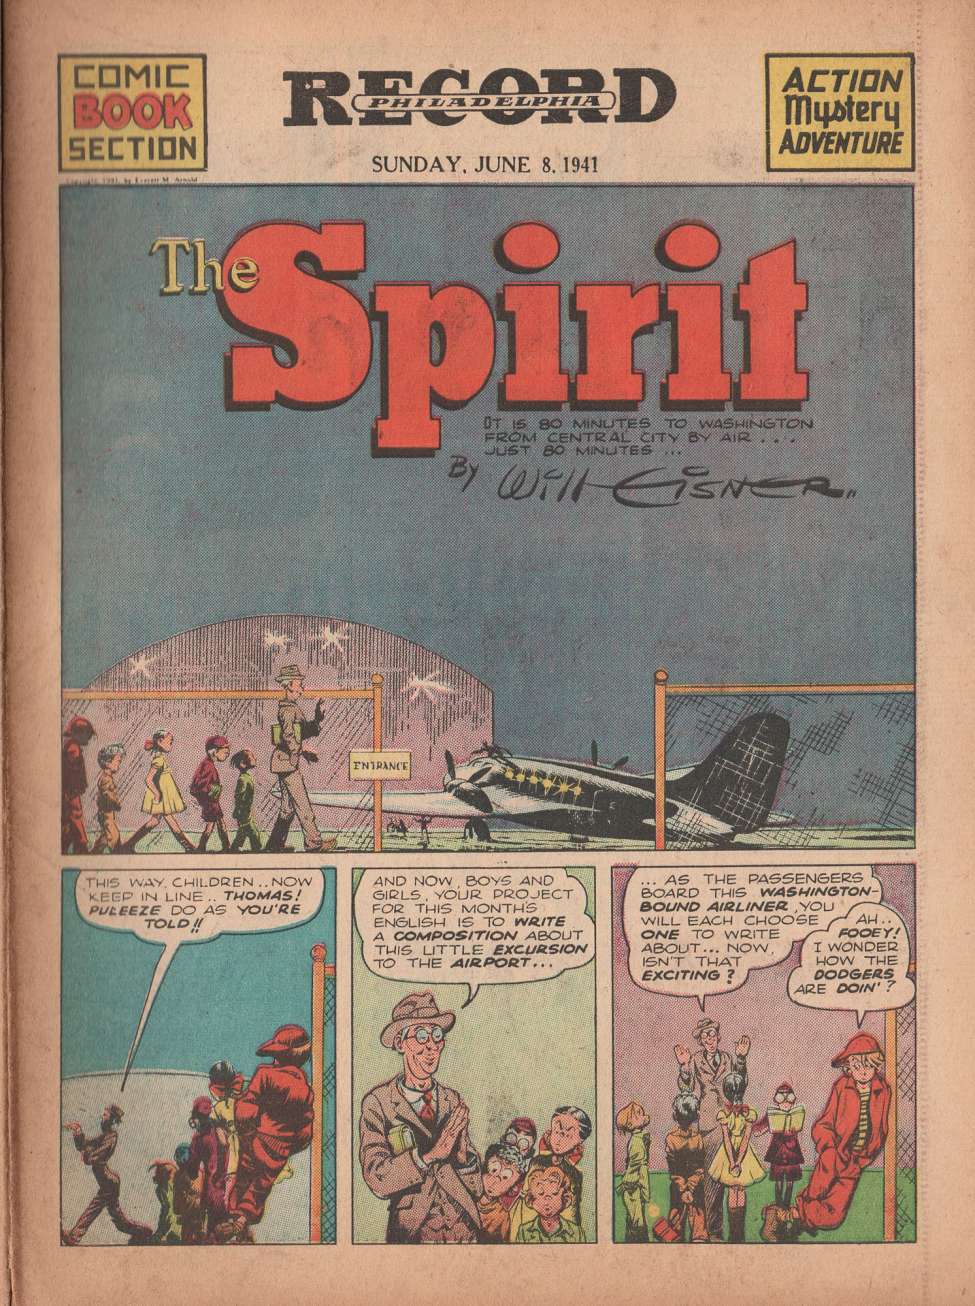 Comic Book Cover For The Spirit (1941-06-08) - Philadelphia Record